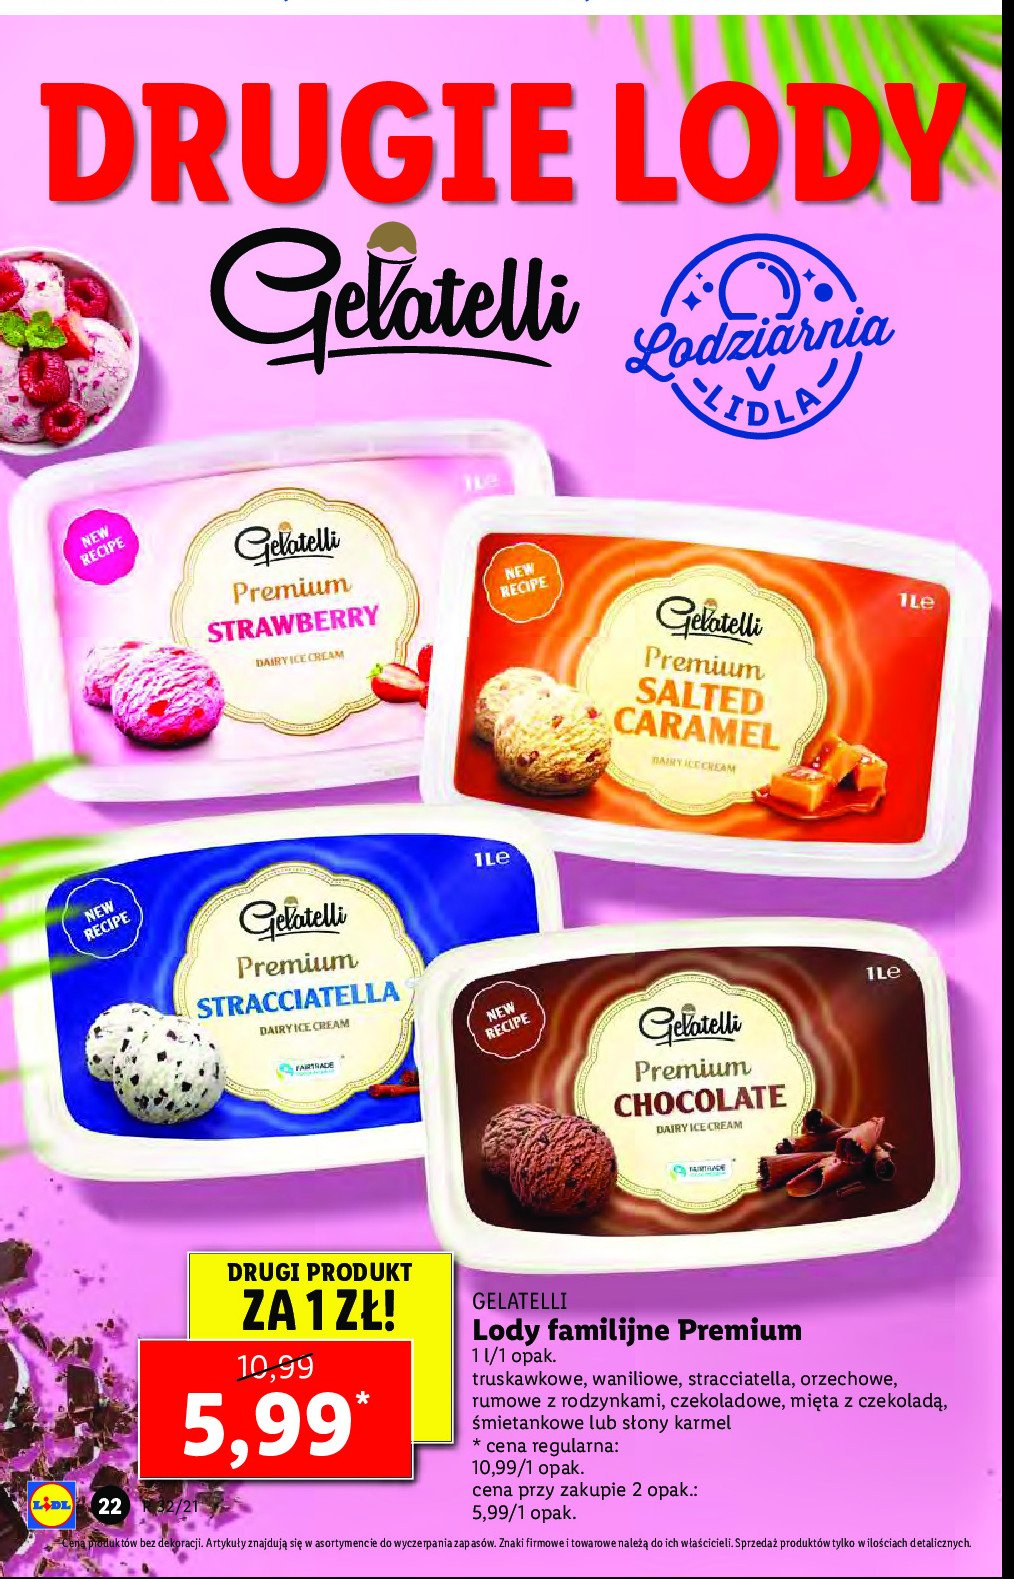 Lody premium chocolate Gelatelli promocja